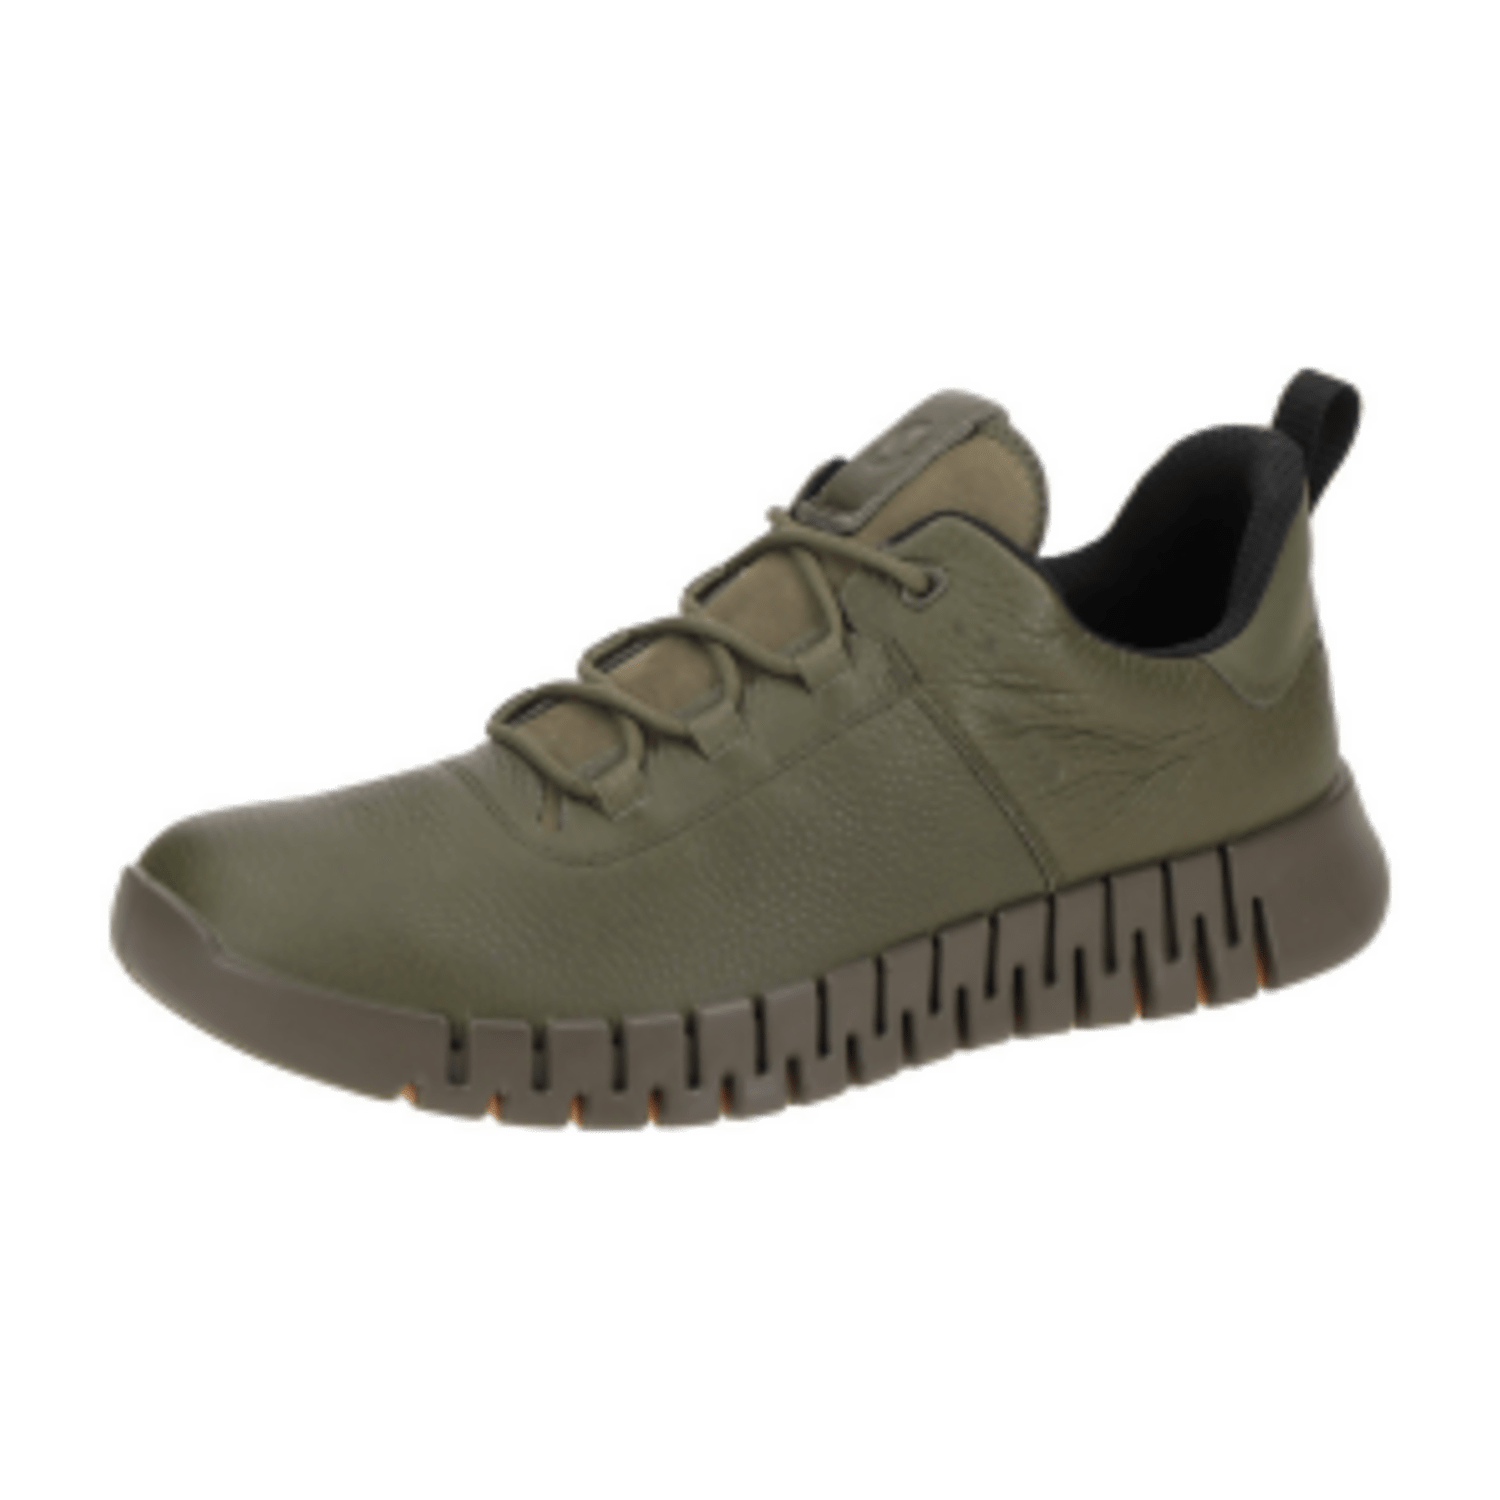 Ecco Gruuv Schuhe grün Sneakers GORE-TEX 525224